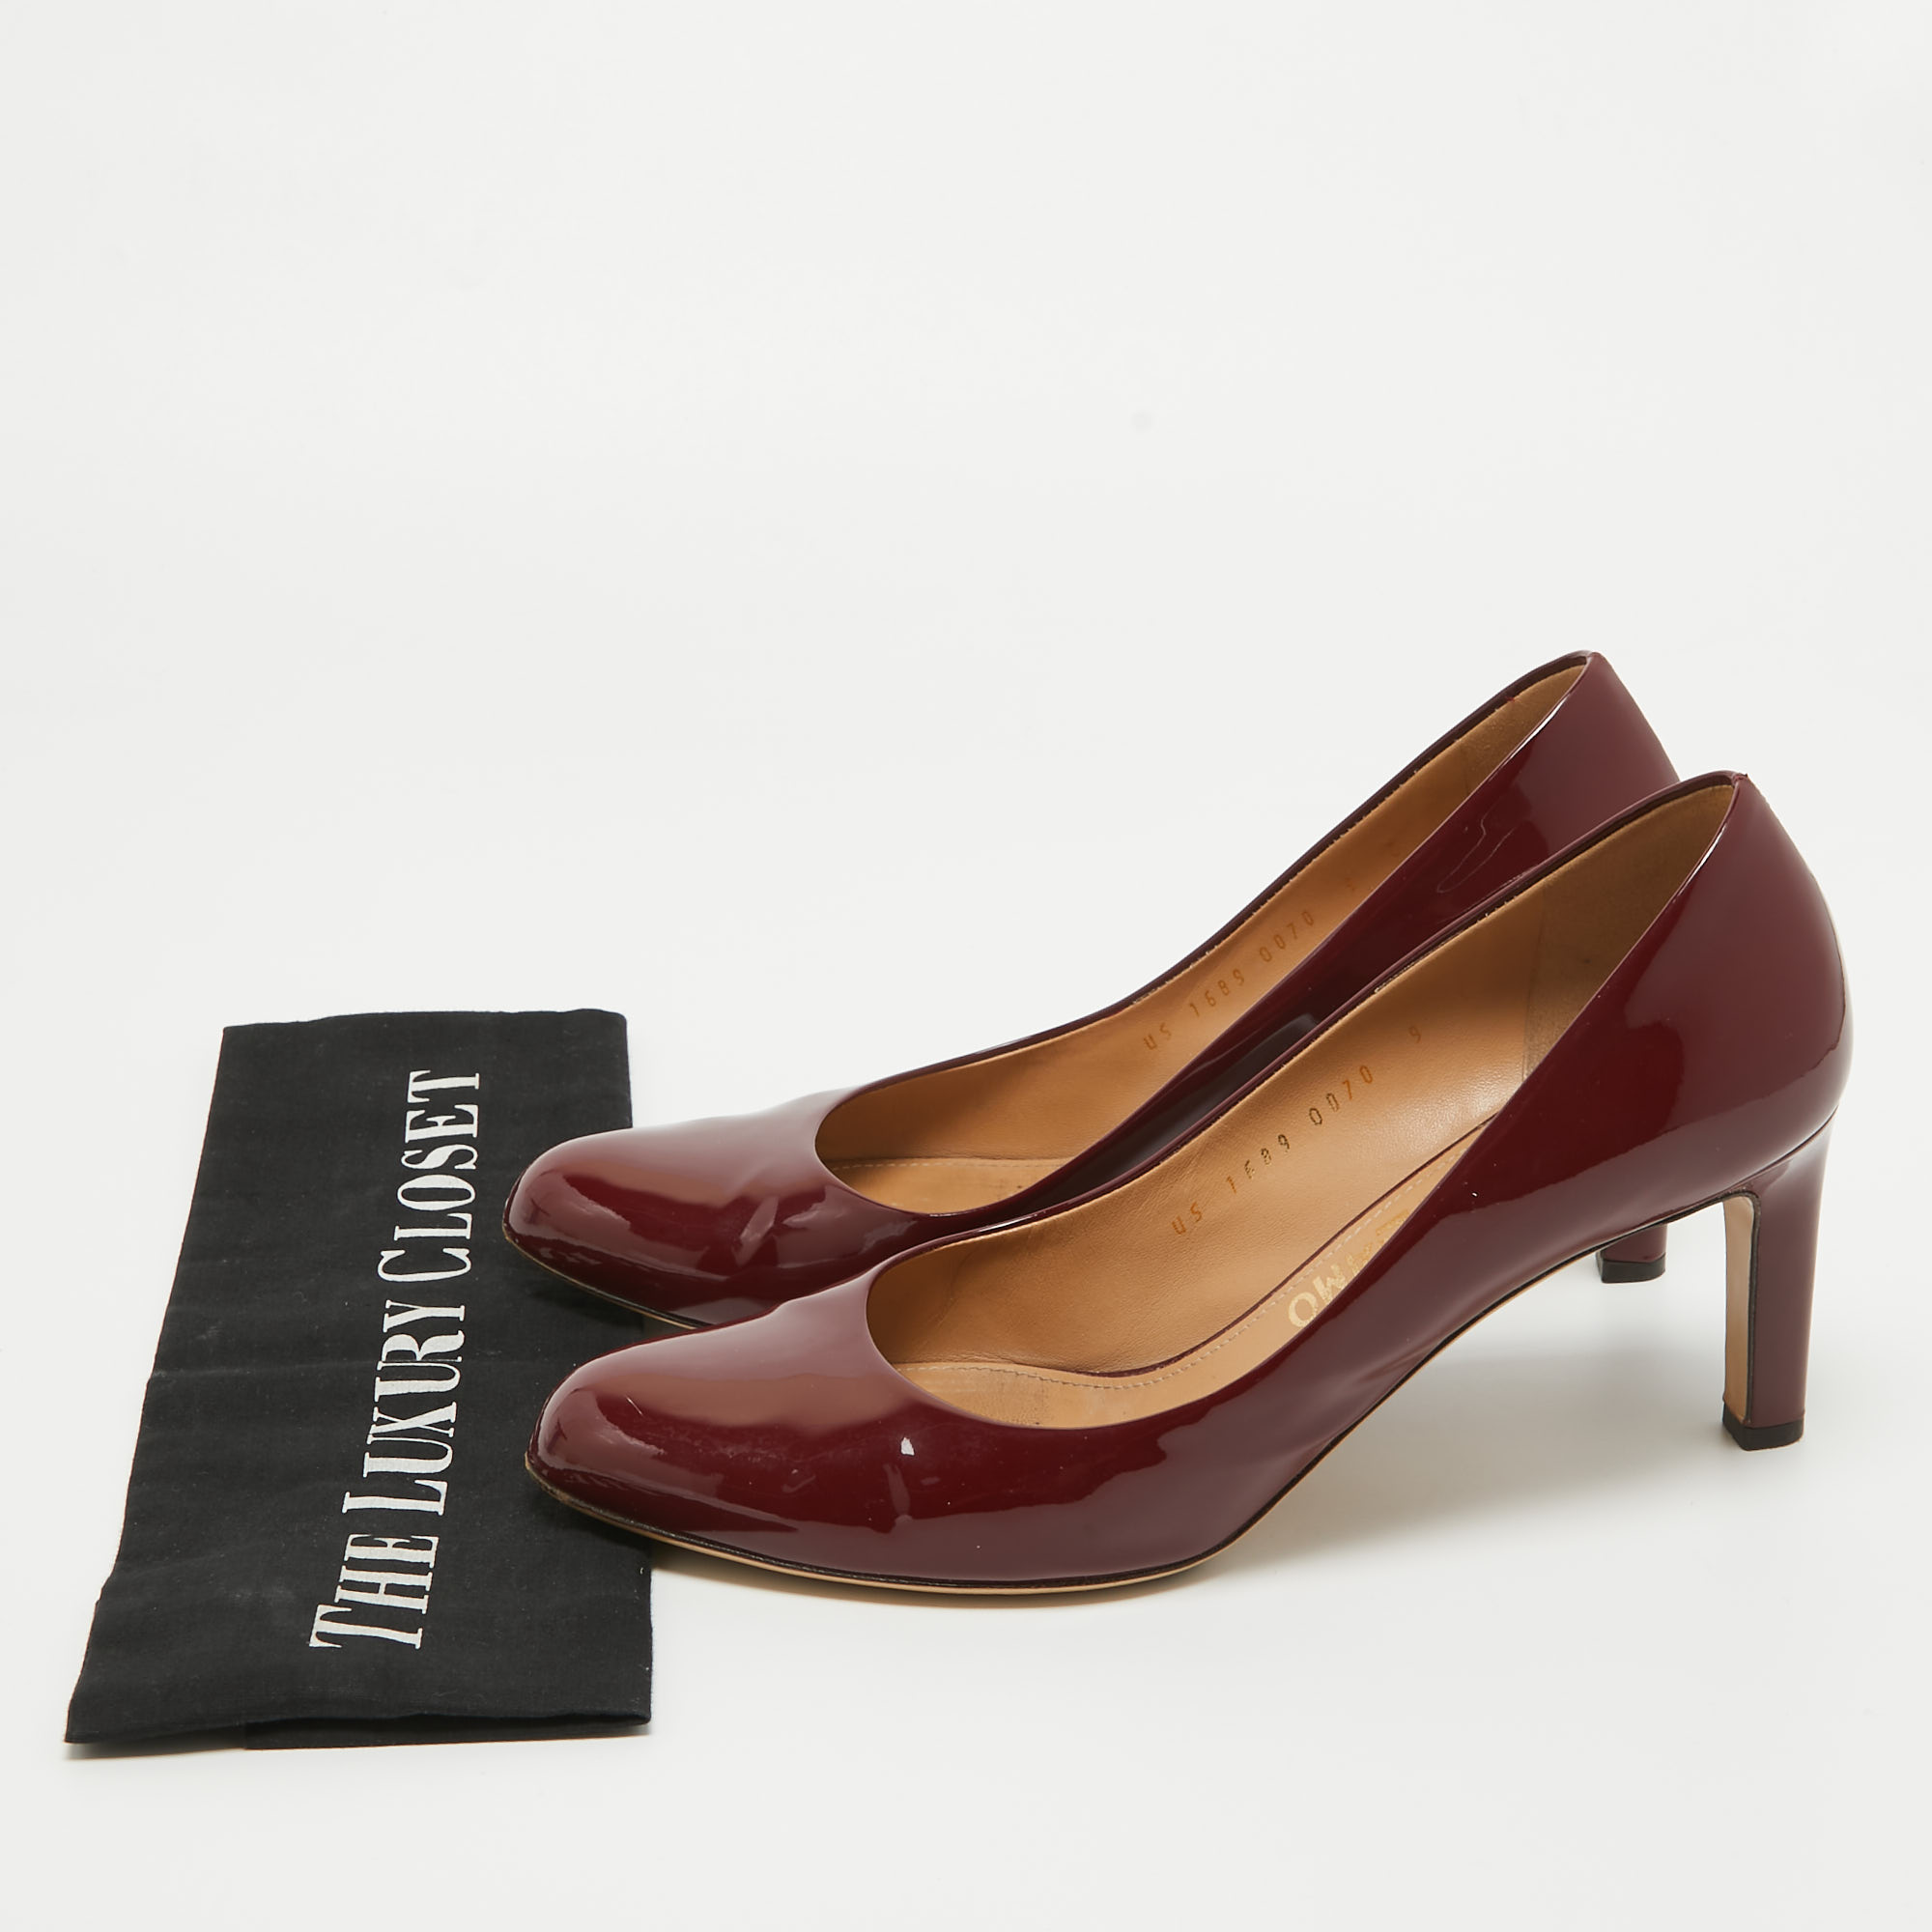 Salvatore Ferragamo Burgundy Patent Leather Round Toe Pumps Size 39.5